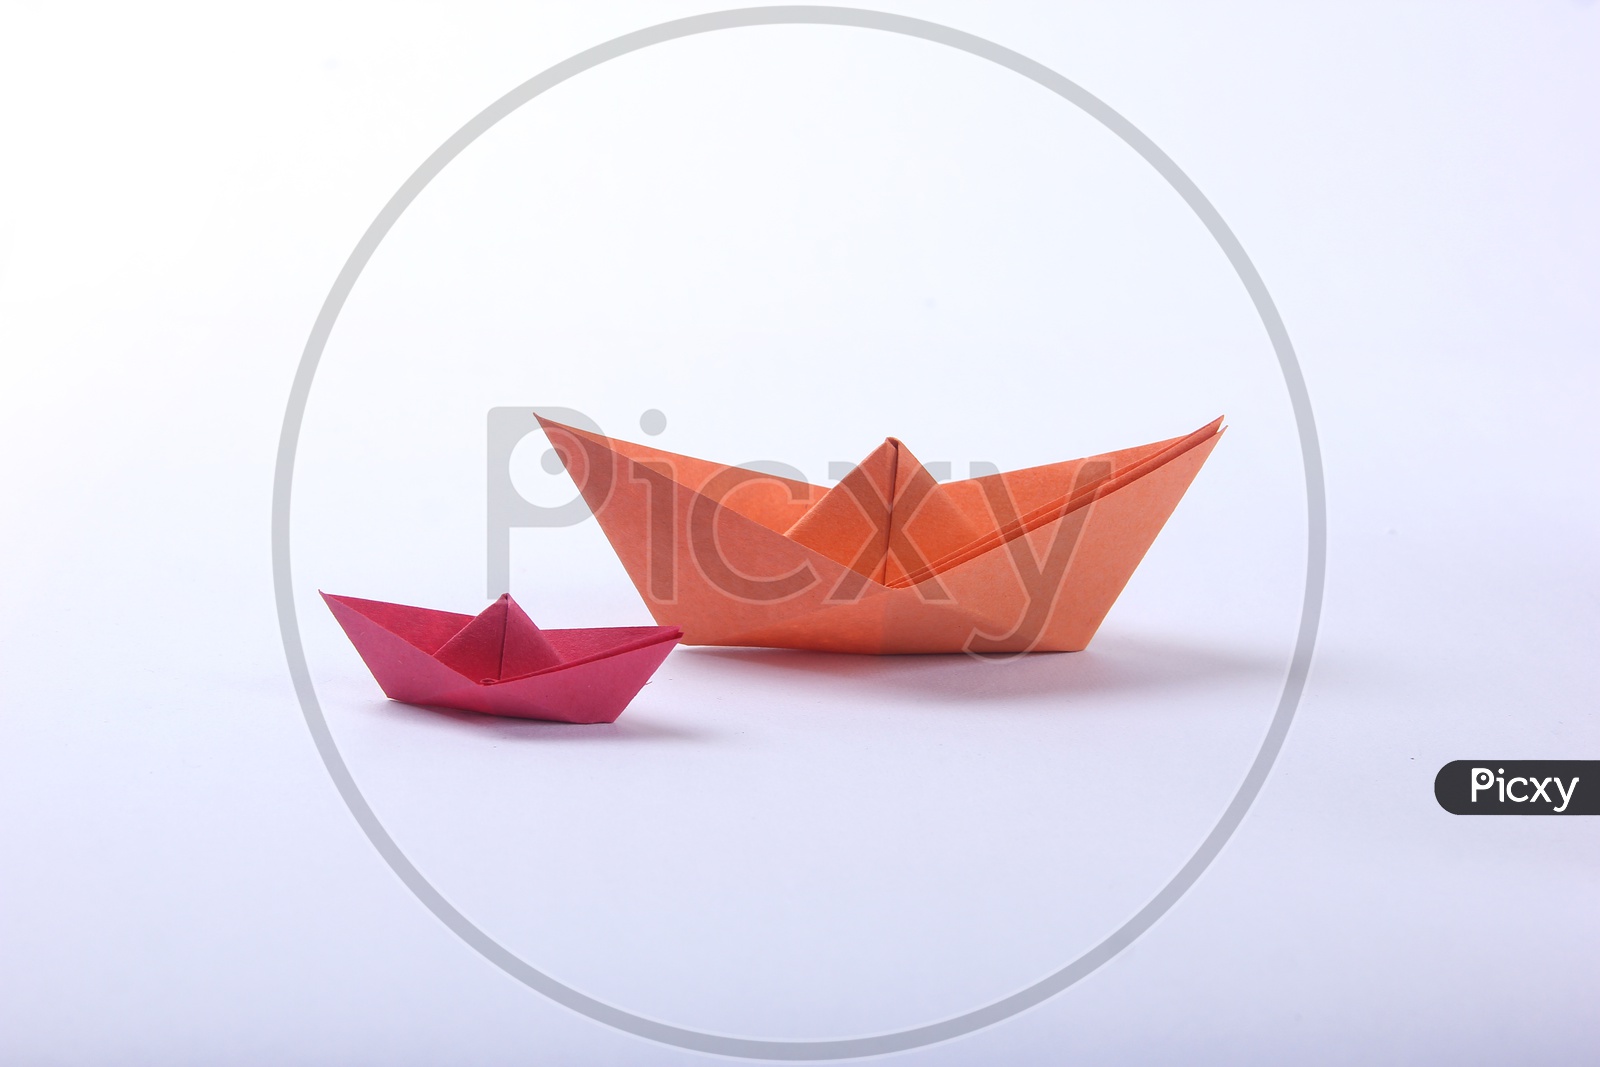 Orange & Pink Paper Boat/Boats/Sailboat